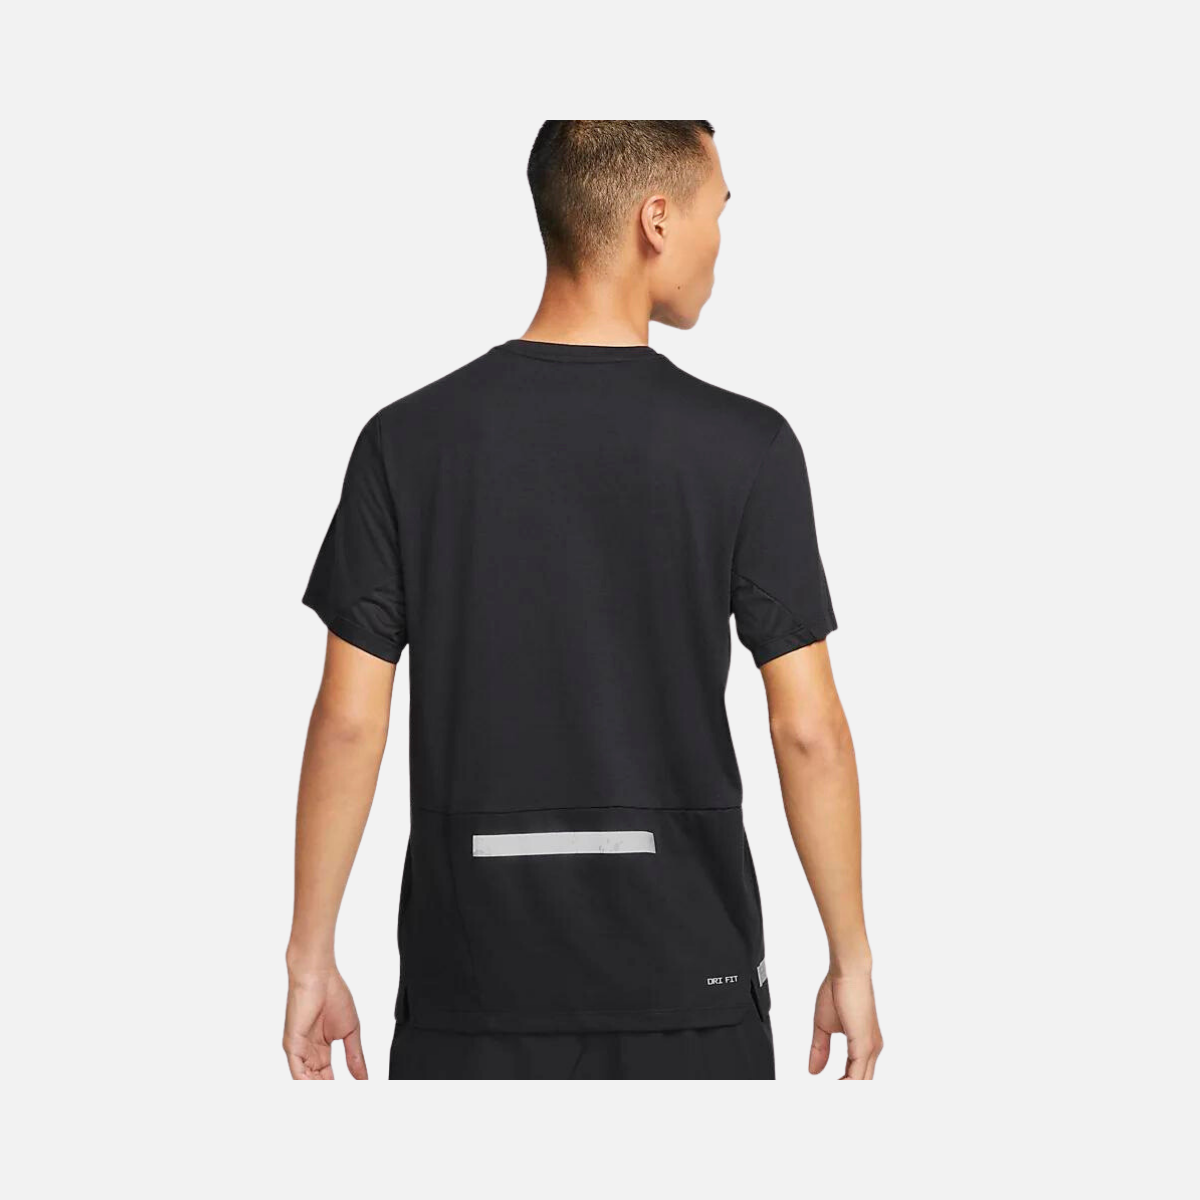 Nike Dri-Fit Division Rise 365 -Men's Short-Sleeve Running Top-Black